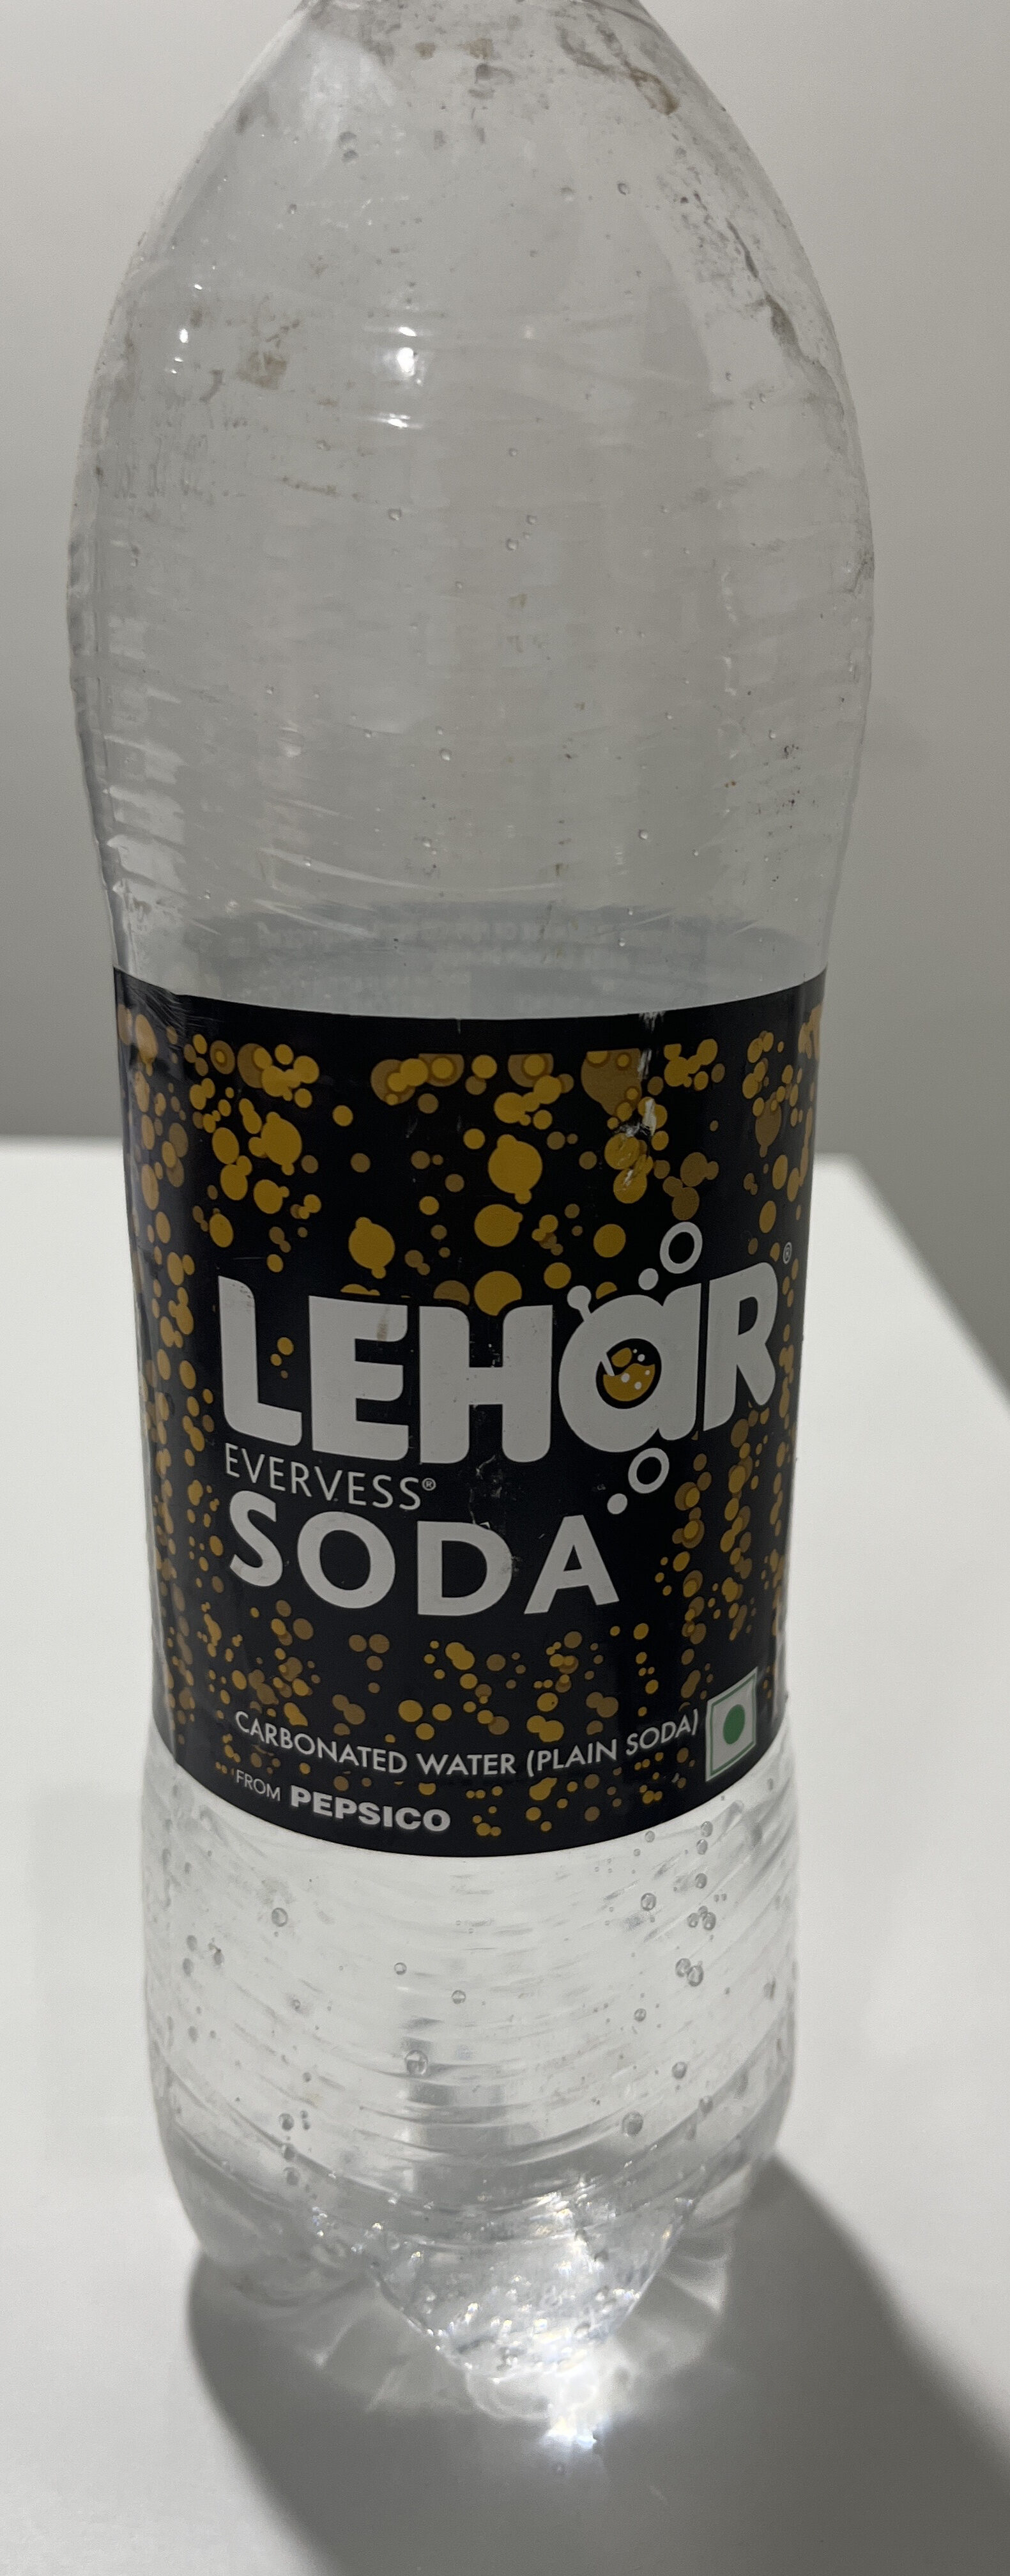 Lehar Evervess Soda 750ml - Product